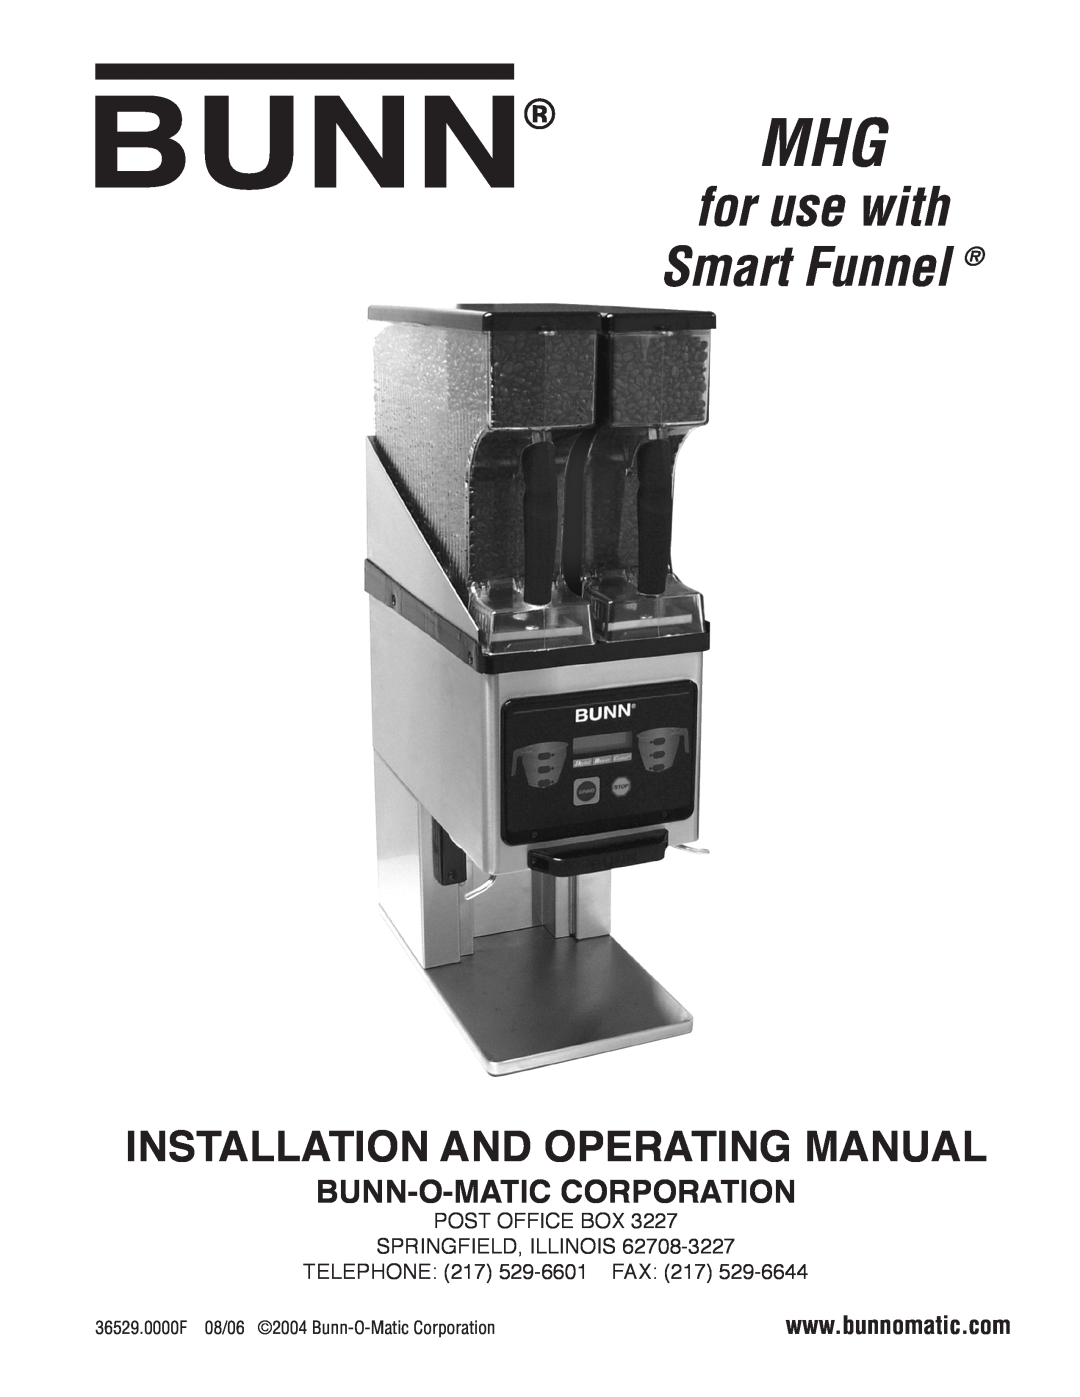 Bunn Dual SH manual Bunn-O-Maticcorporation, Post Office Box, Springfield, Illinois, Telephone, Fax 